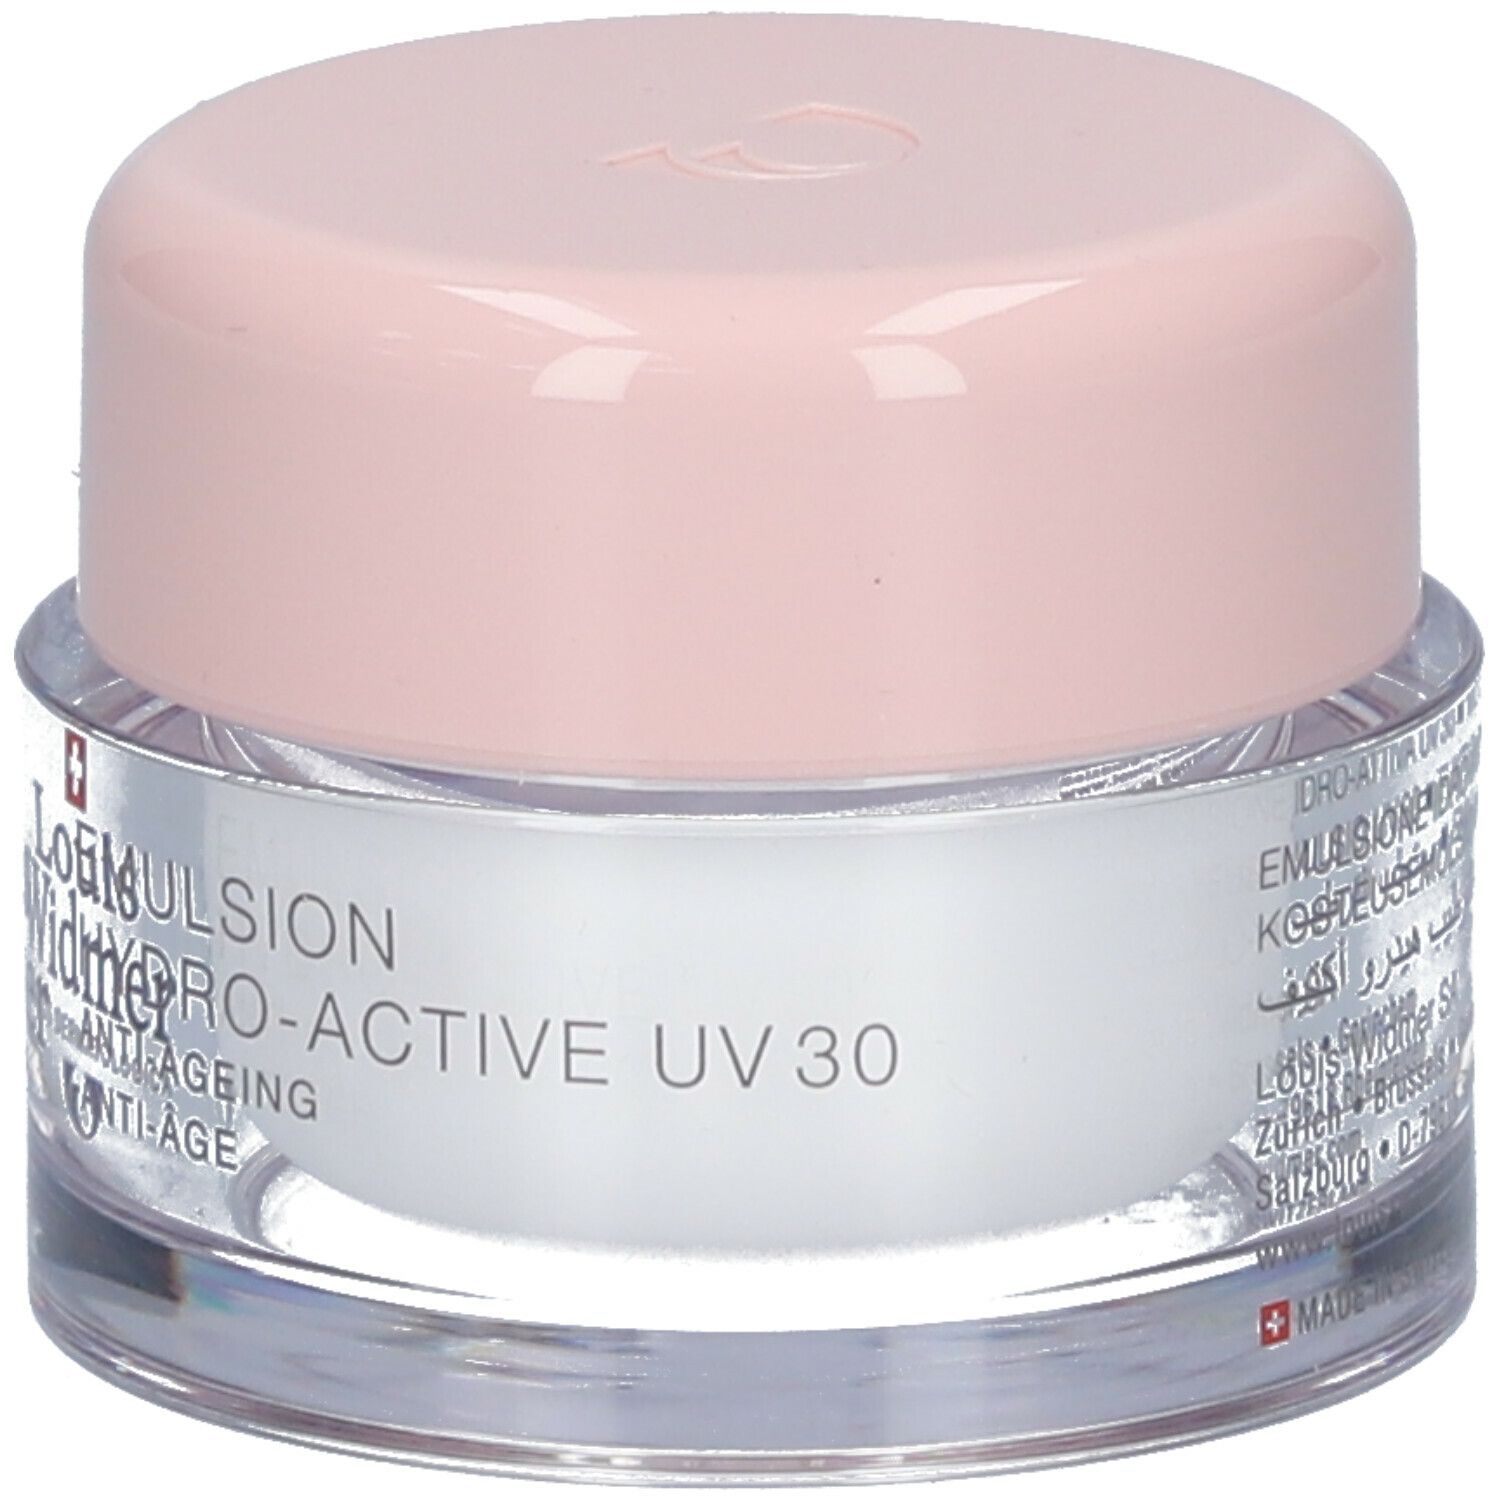 Louis Widmer Moisture Emulsion Hydro-Active UV 30